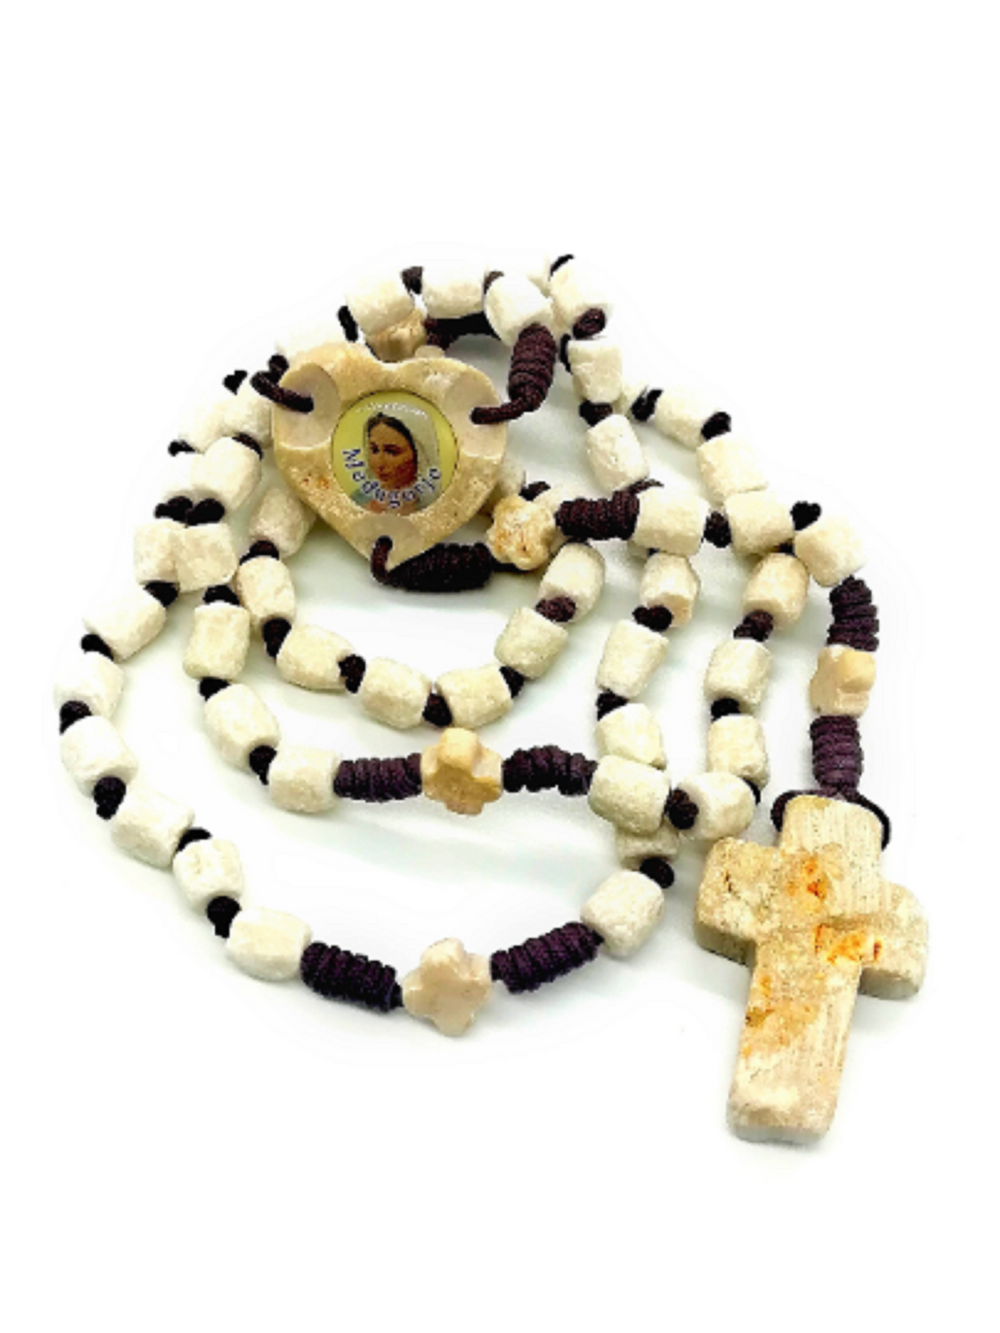 Handmade Medjugorje Stone Rosary - Virgin Mary Heart| MedjugorjeGifts